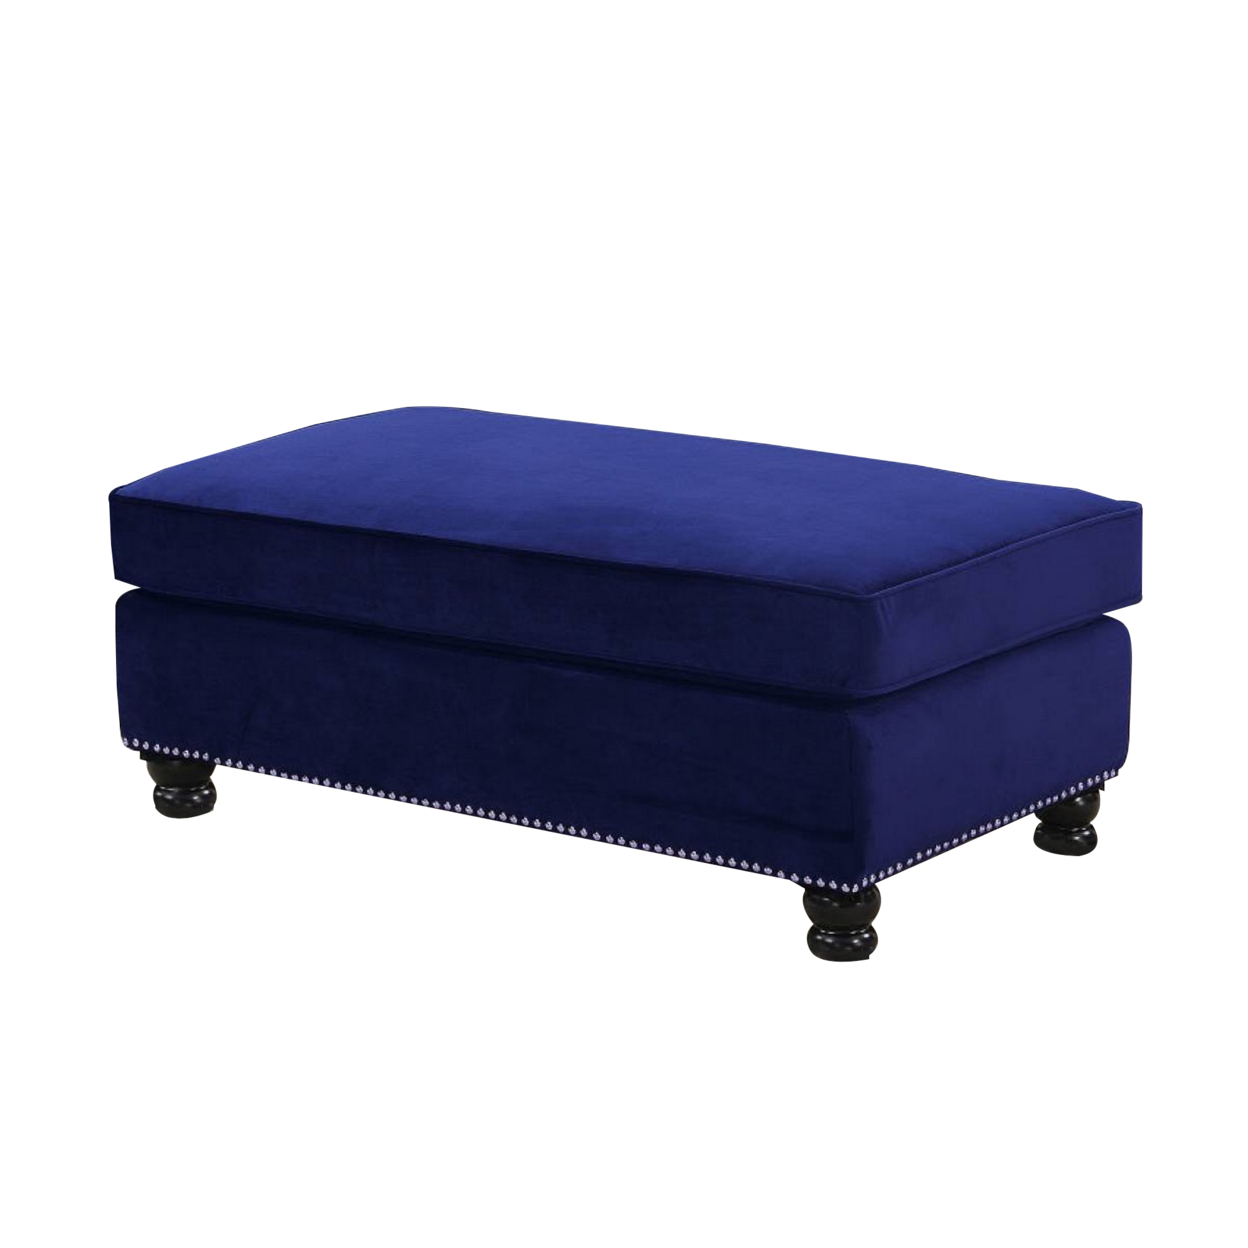 46 Inches Nailhead Trim Velvet Upholstered Ottoman, Blue- Saltoro Sherpi